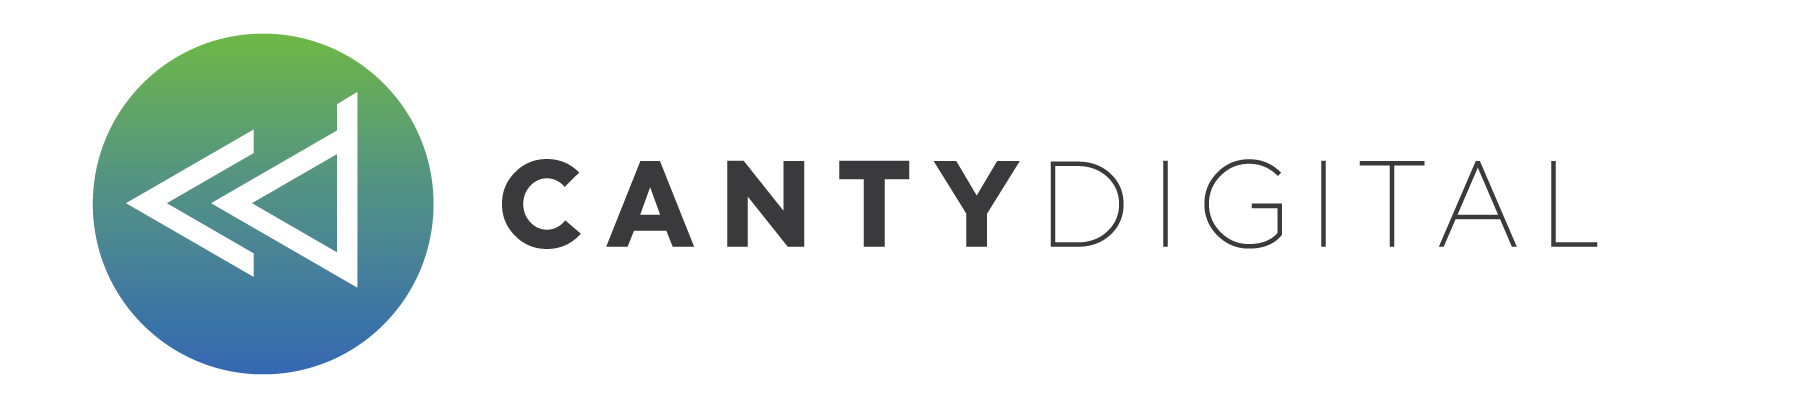 CantyDigital Logo